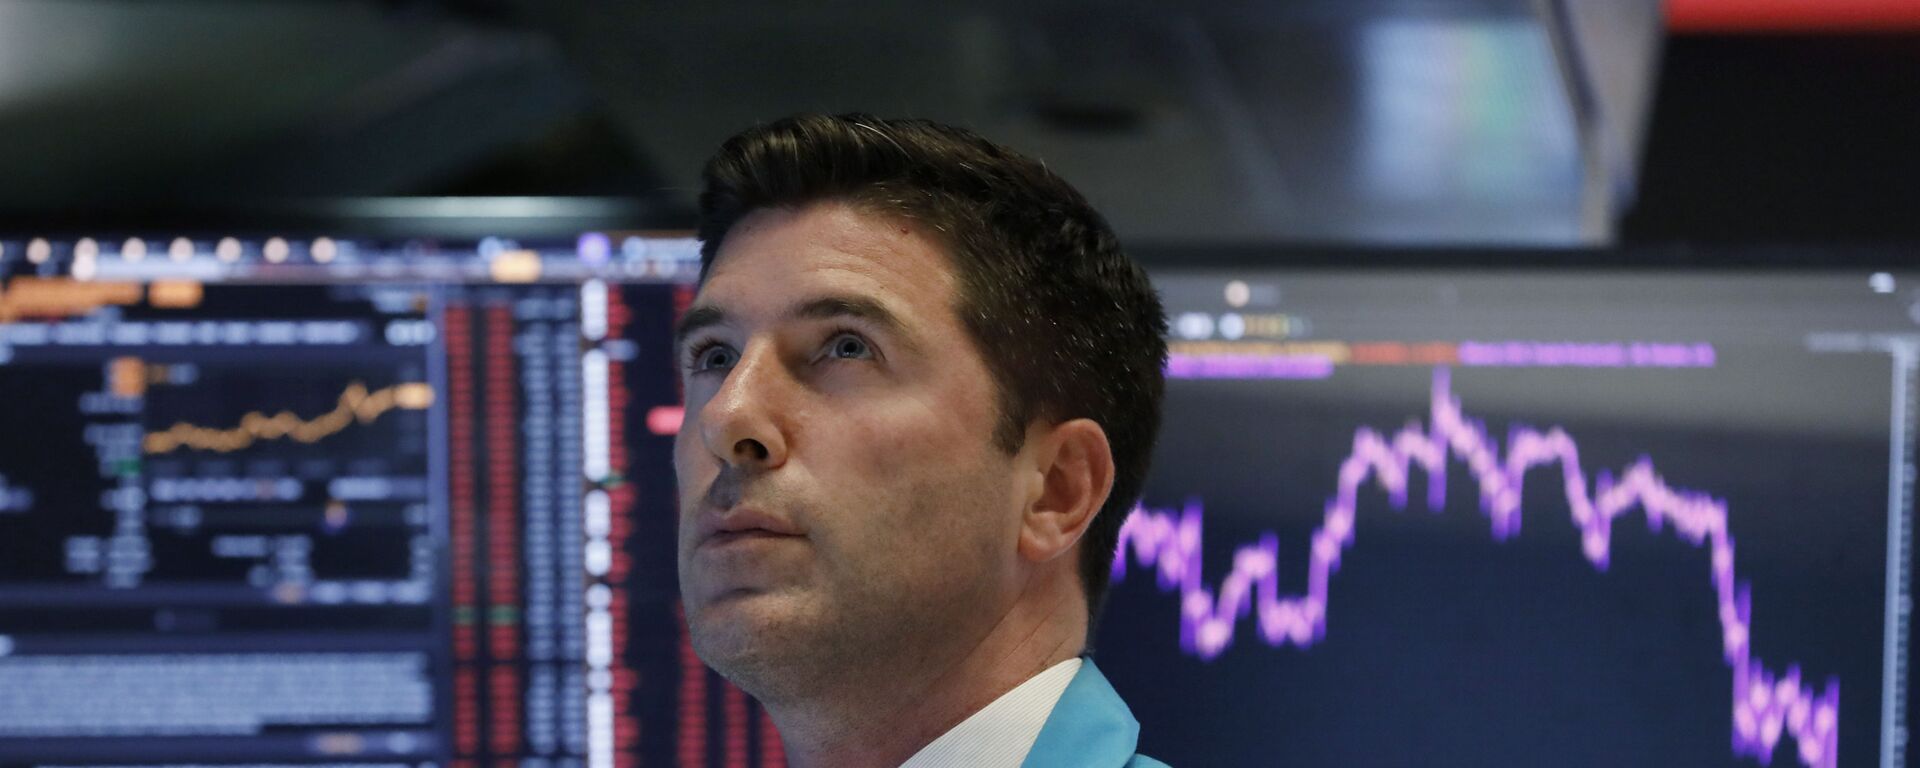 Trader em Wall Street observa queda brusca no índice Dow Jones, em Agosto de 2019.  - Sputnik Brasil, 1920, 05.07.2022